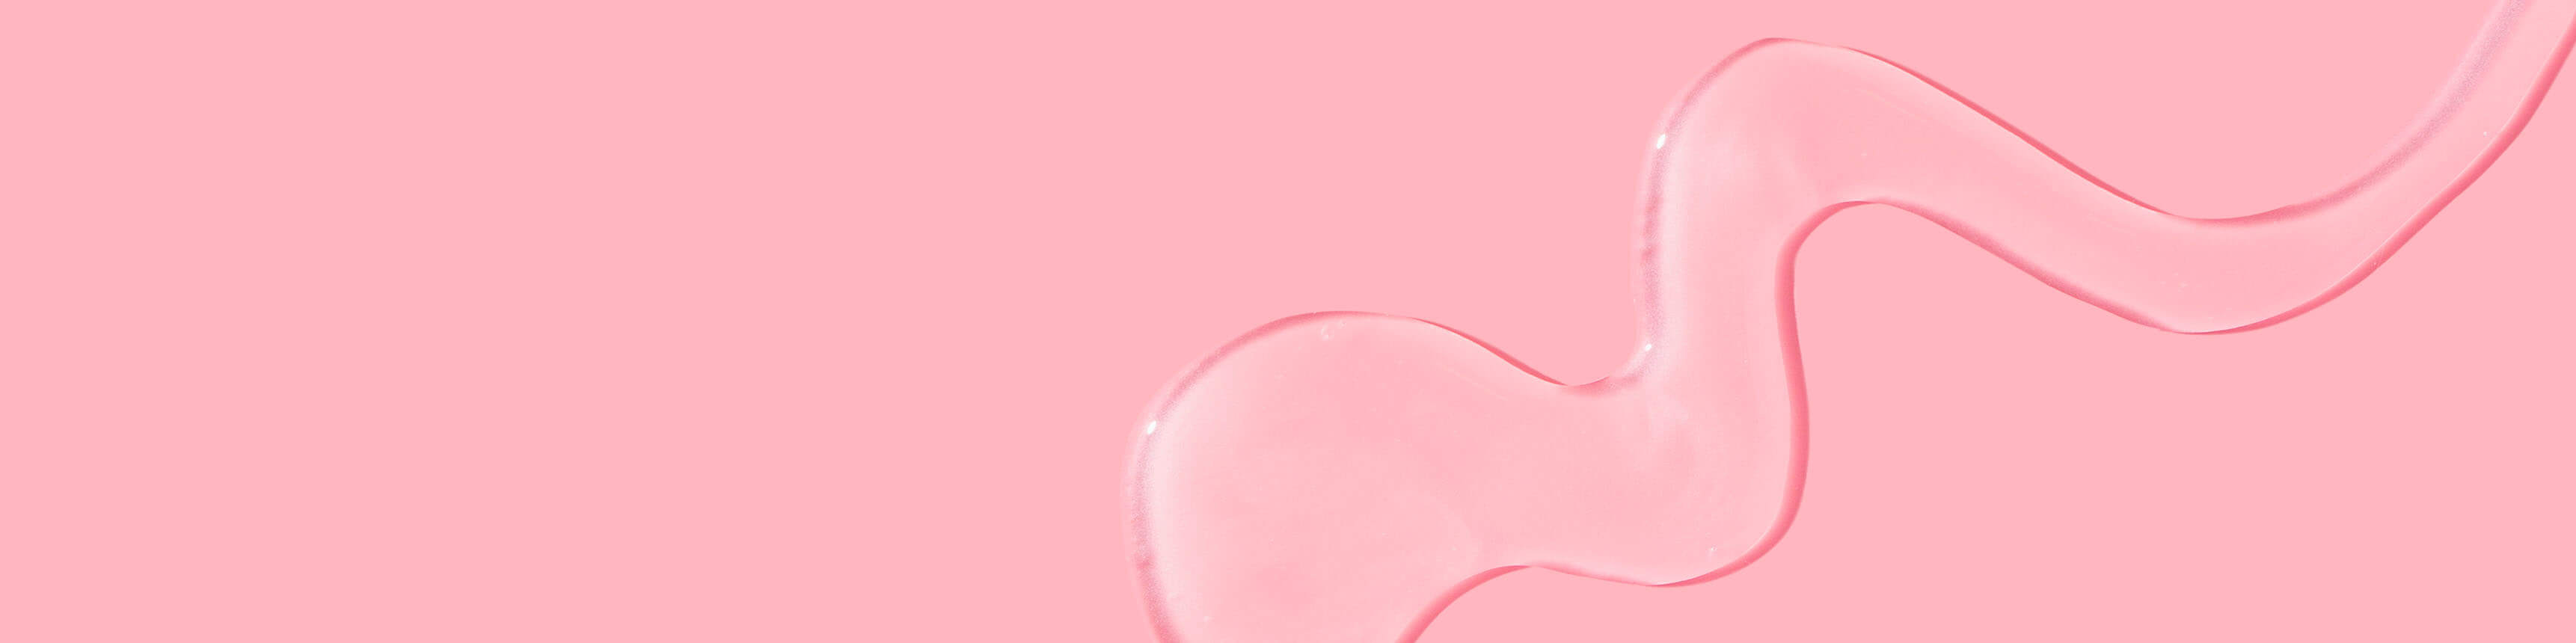 hair gel on pink background